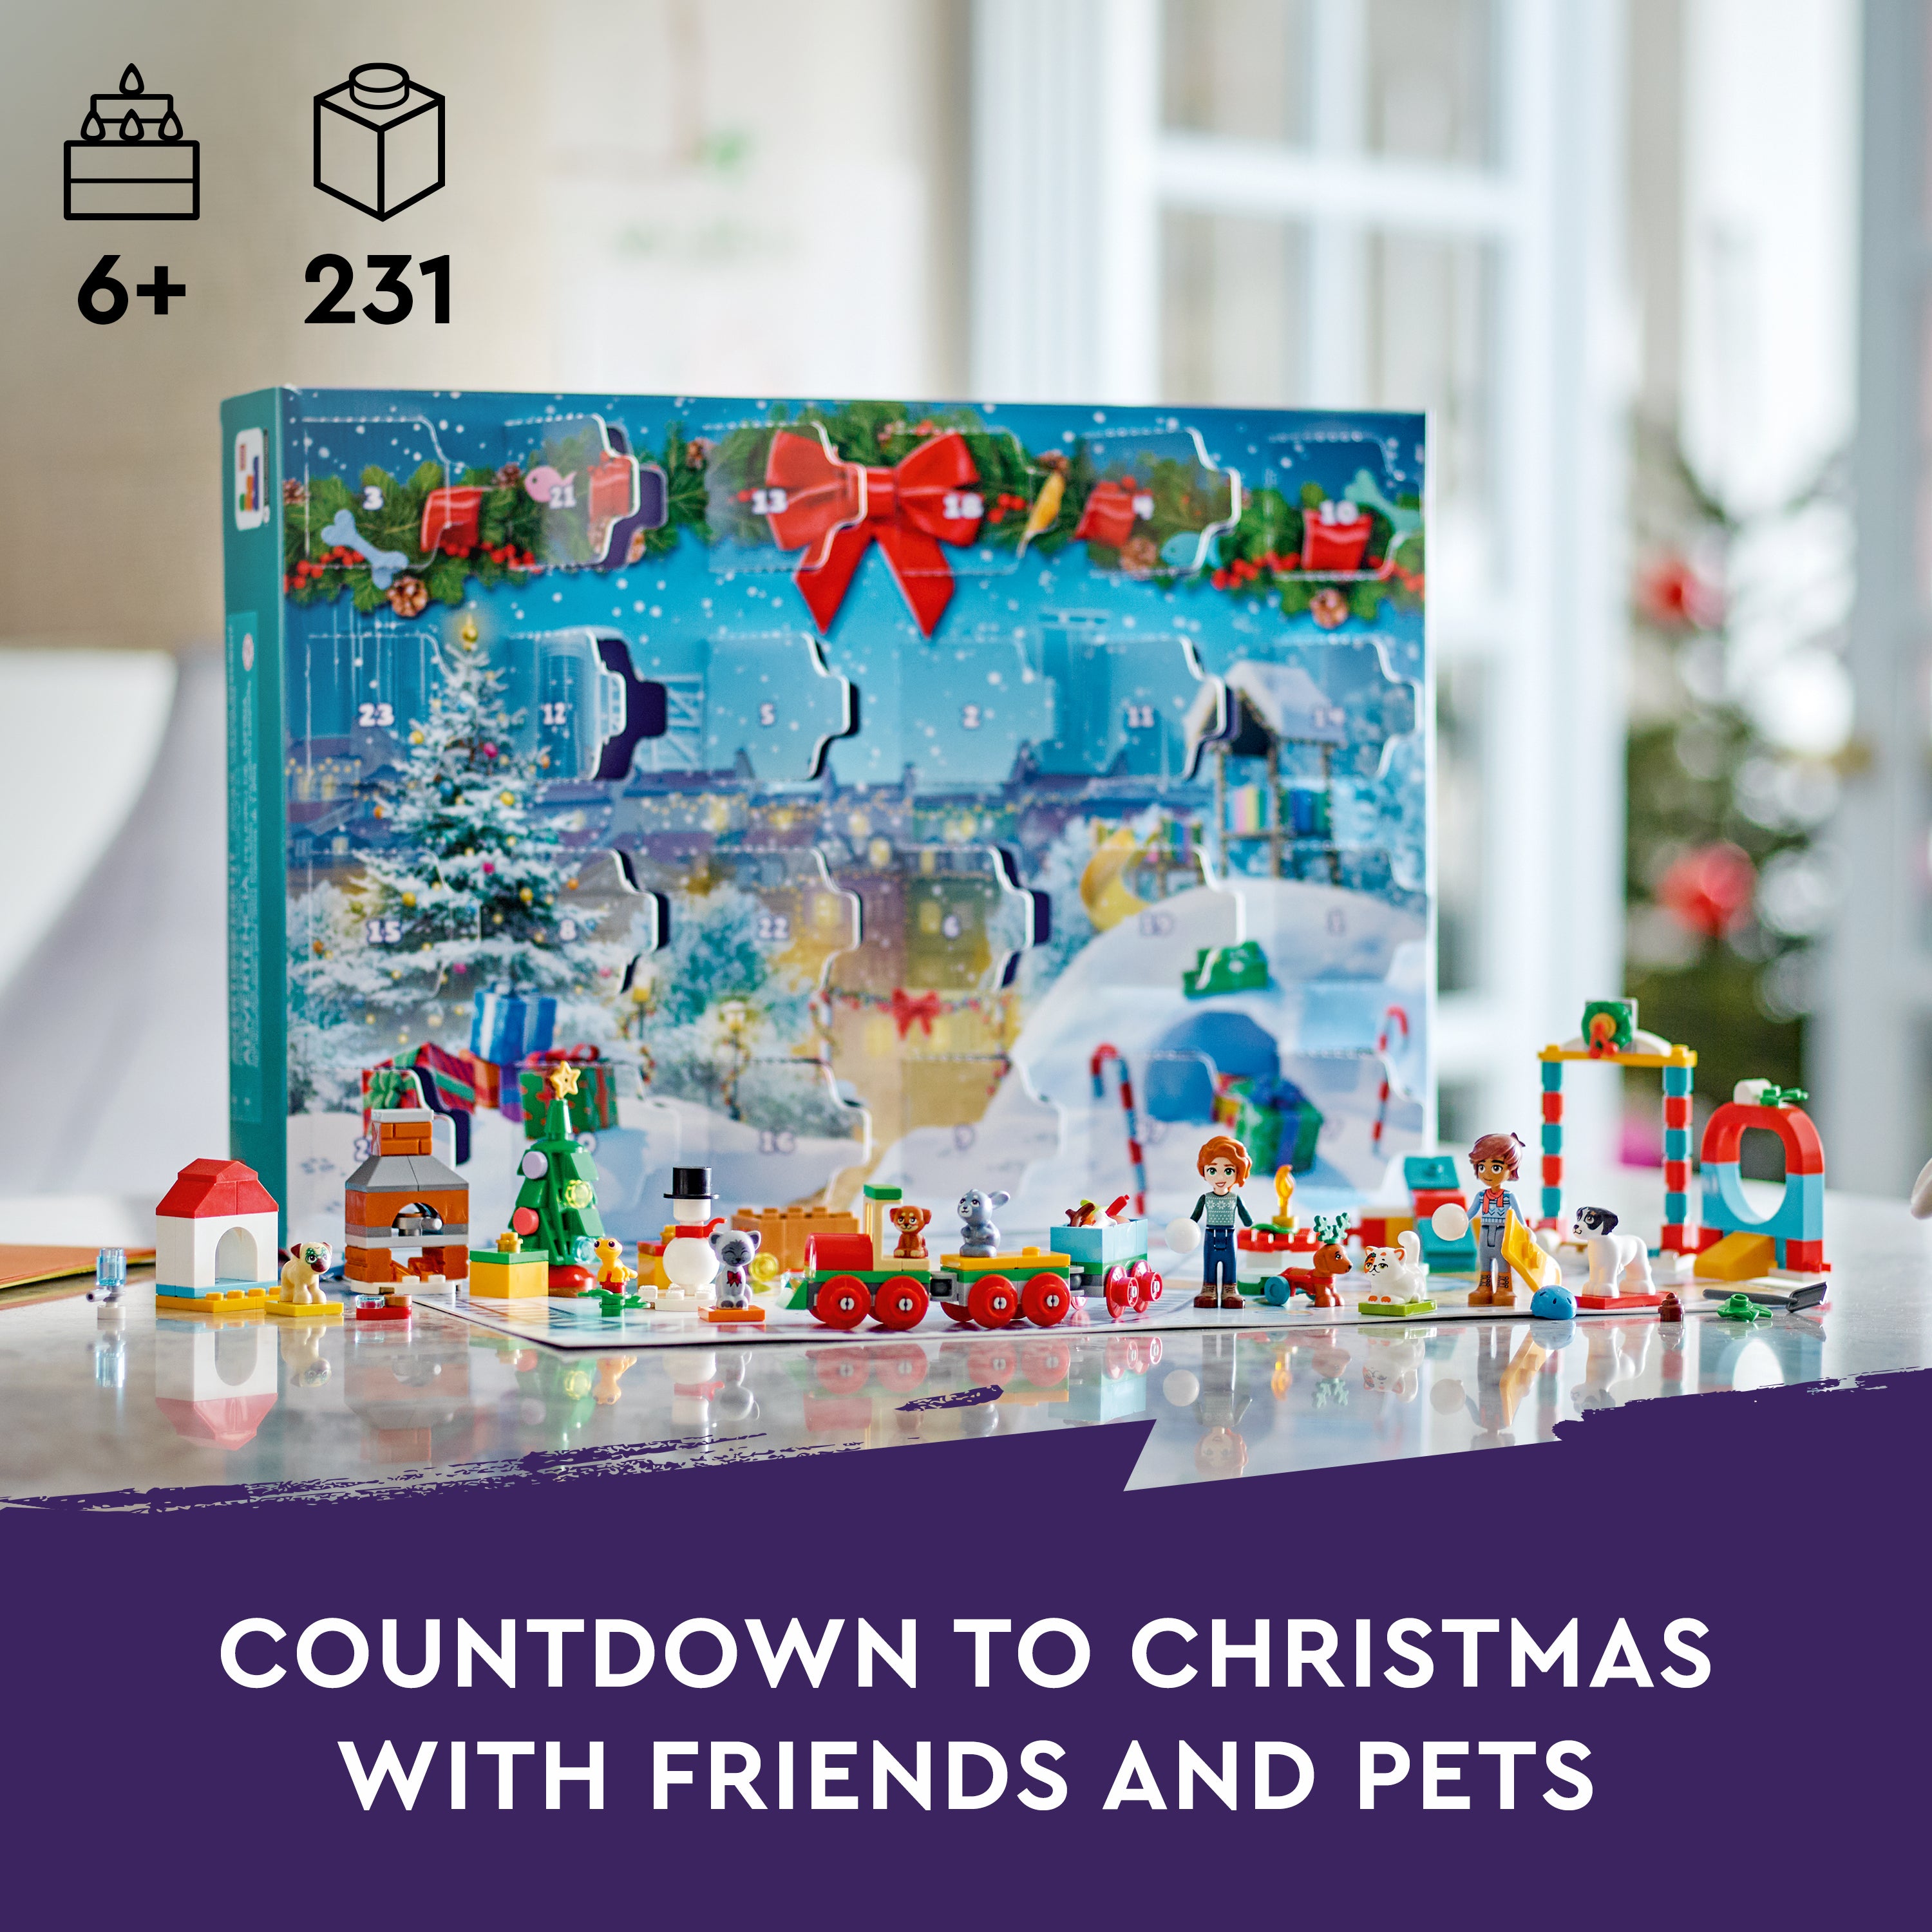 Lego 41758 Friends Advent Calendar